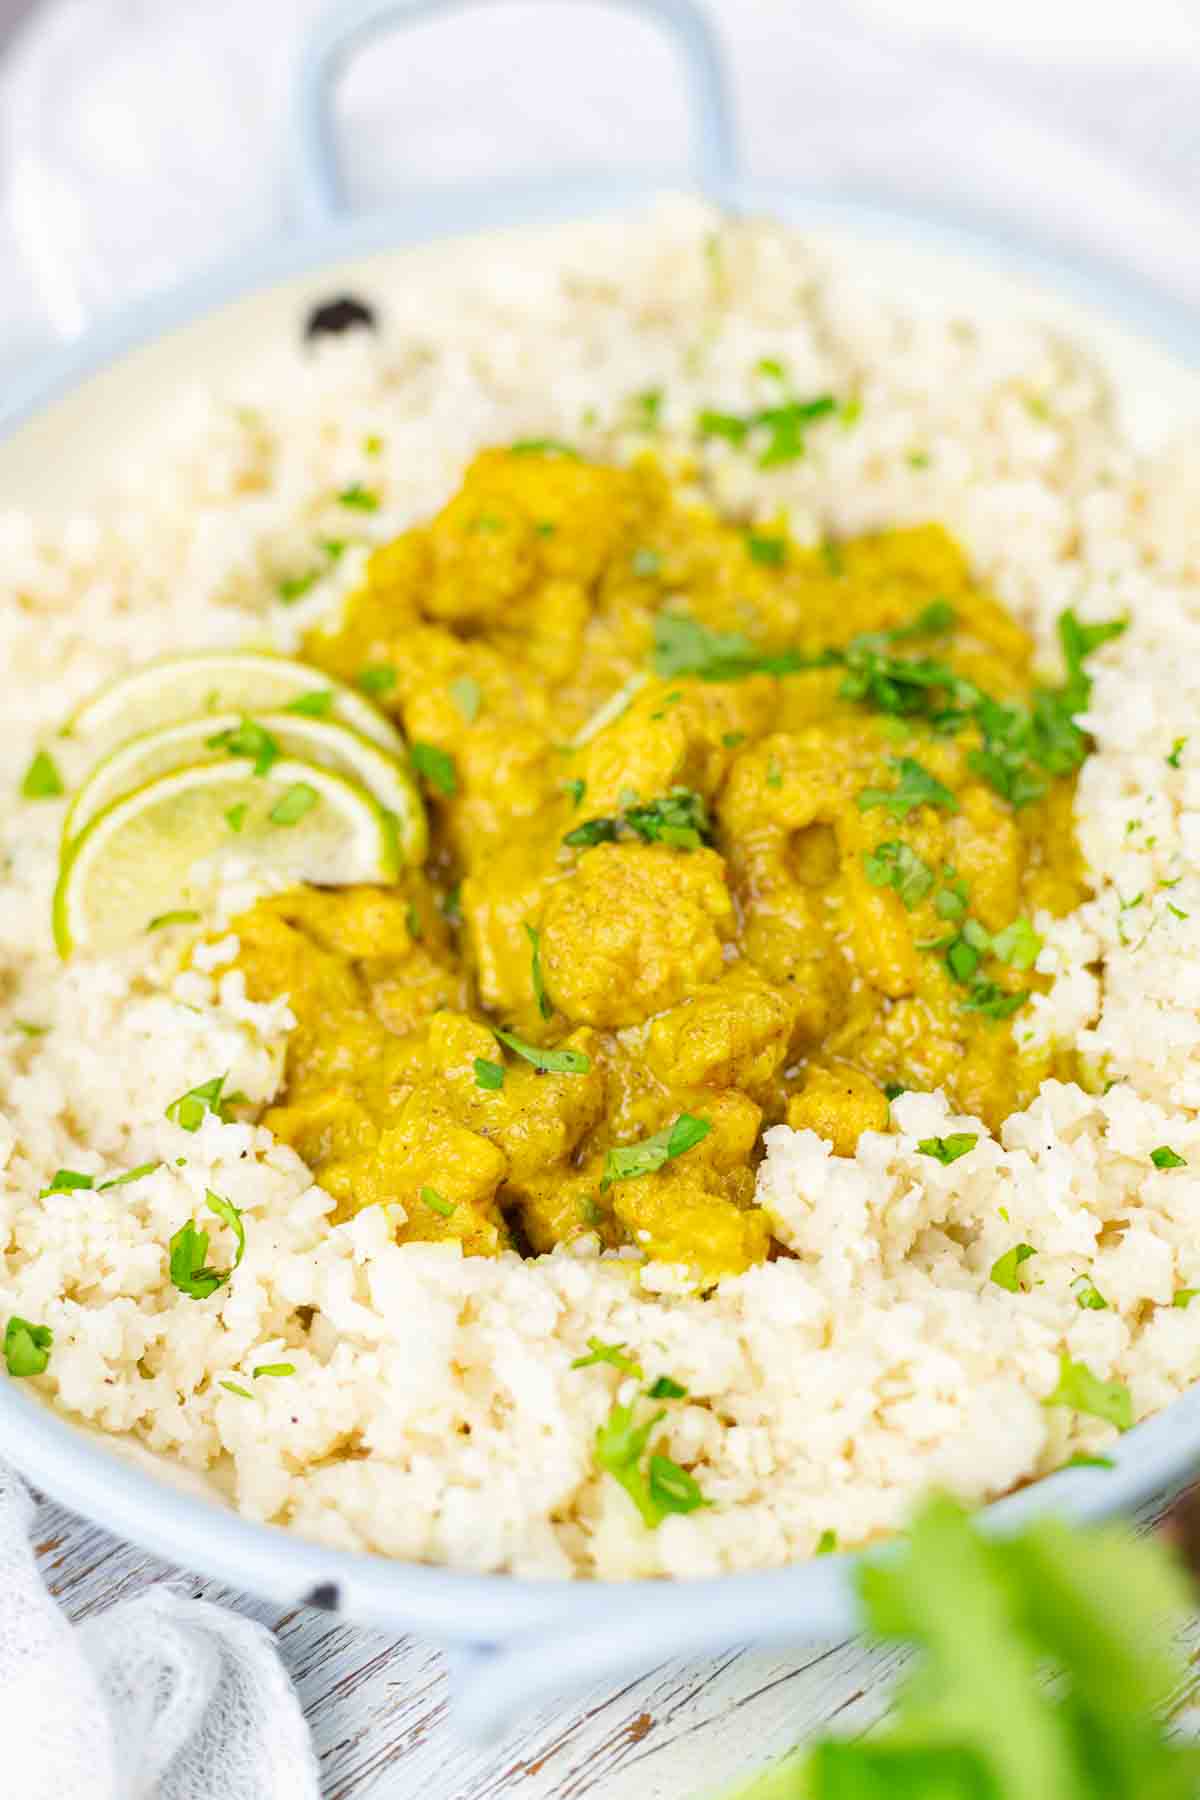 Curry Chicken with cauli rice.